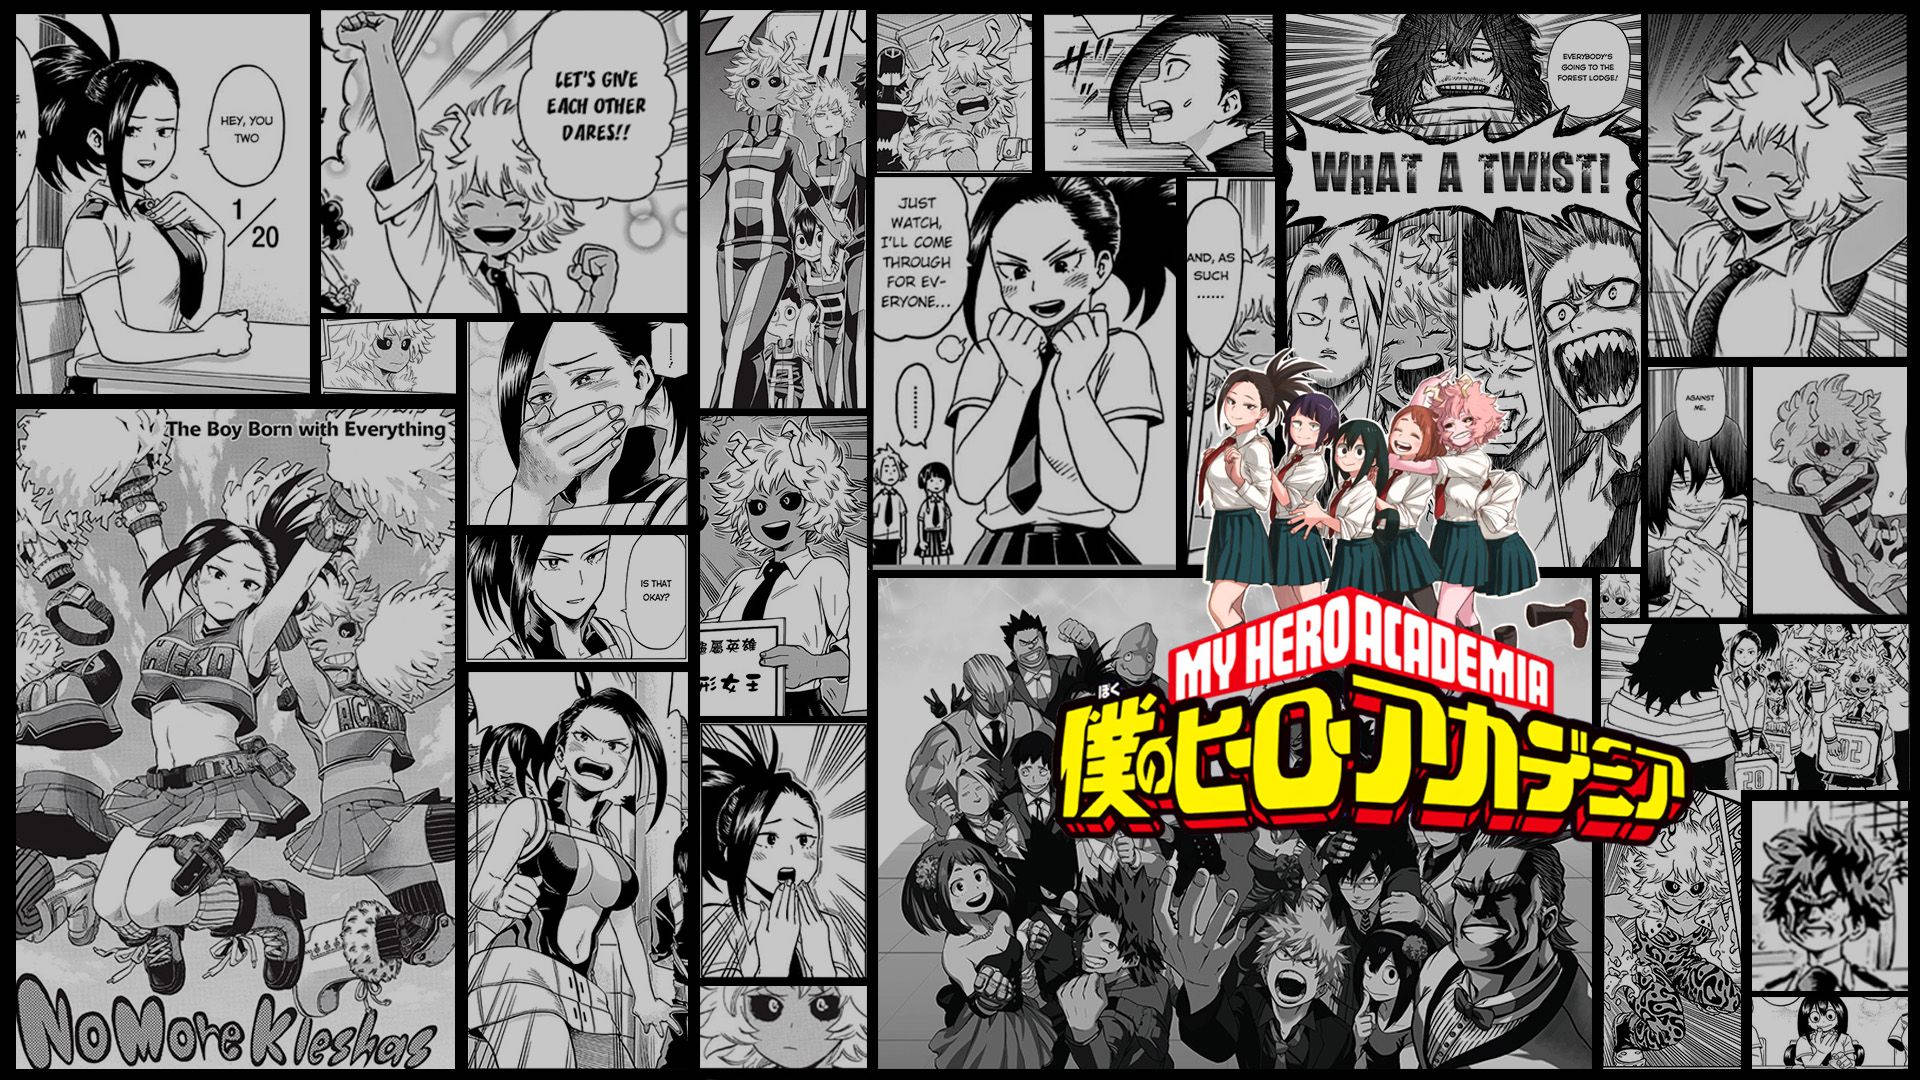 Manga 1920X1080 Wallpaper and Background Image